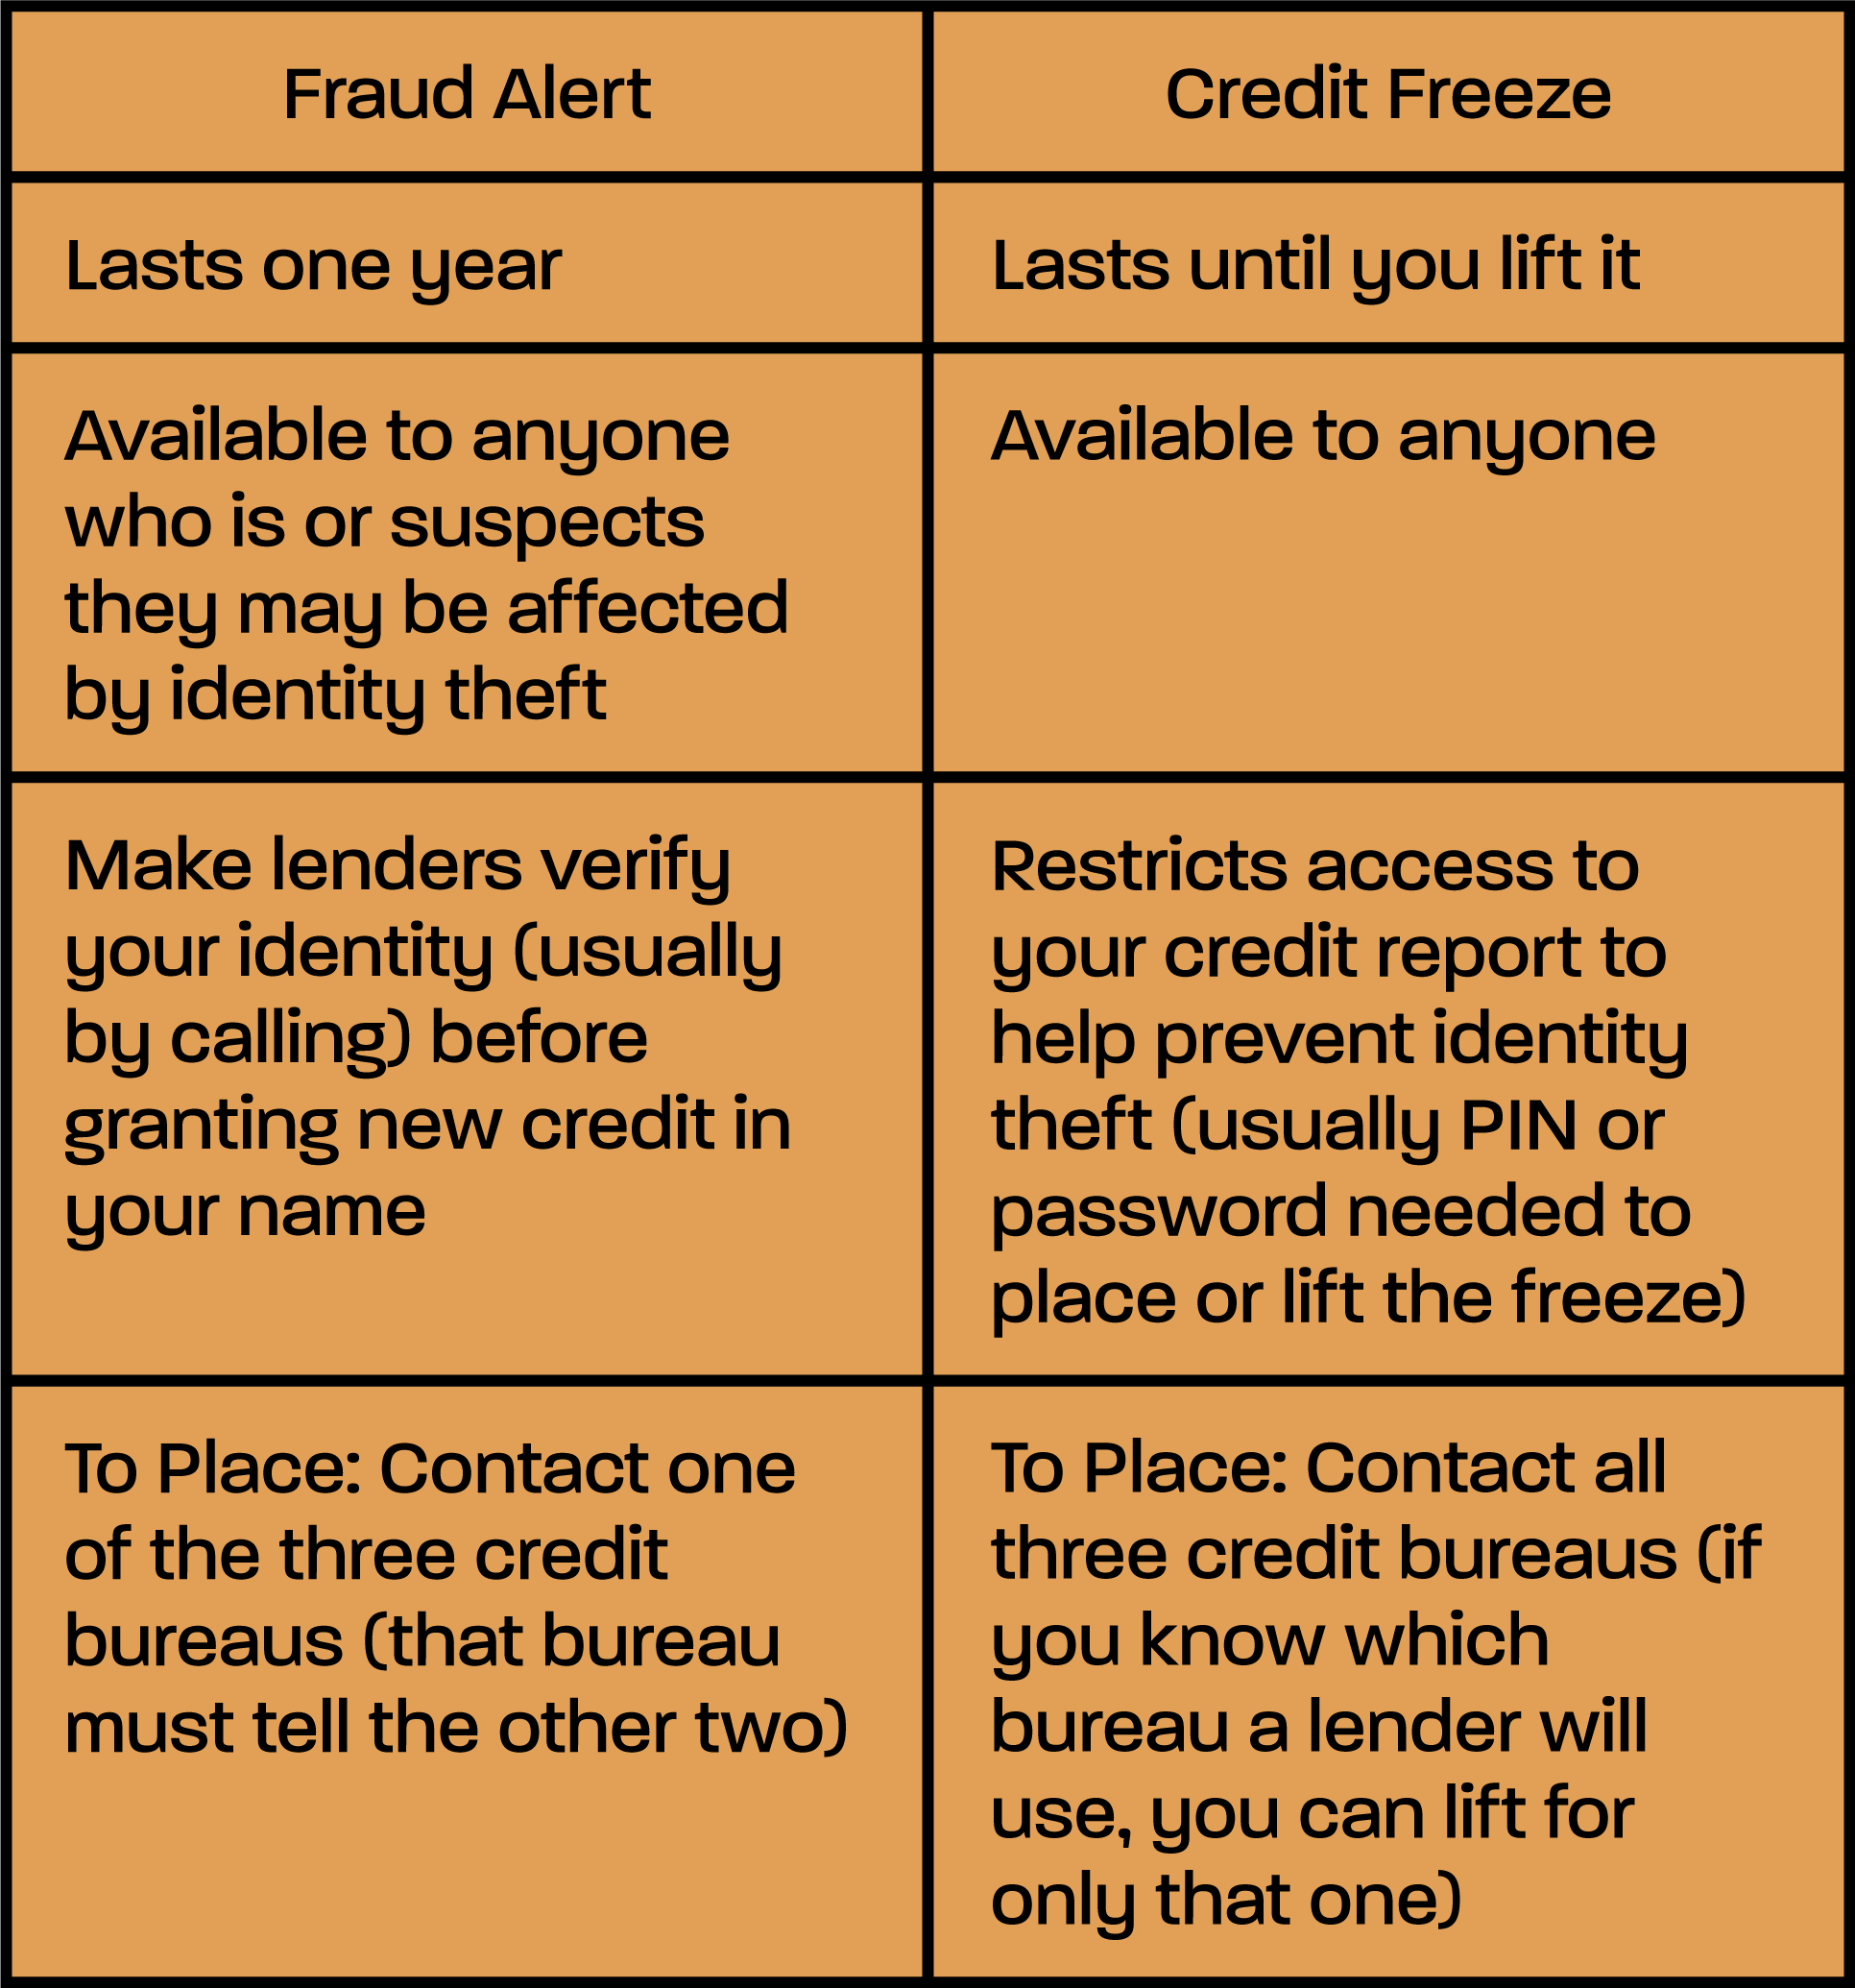 Fraud Alert vs. Credit Freeze